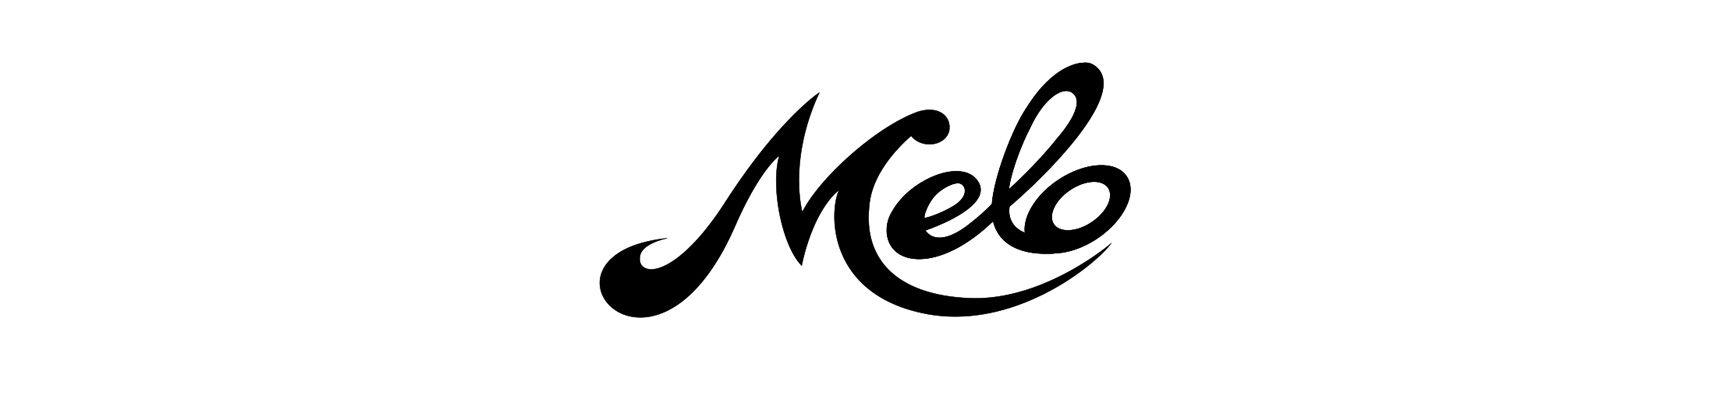 Carmelo Logo - Carmelo